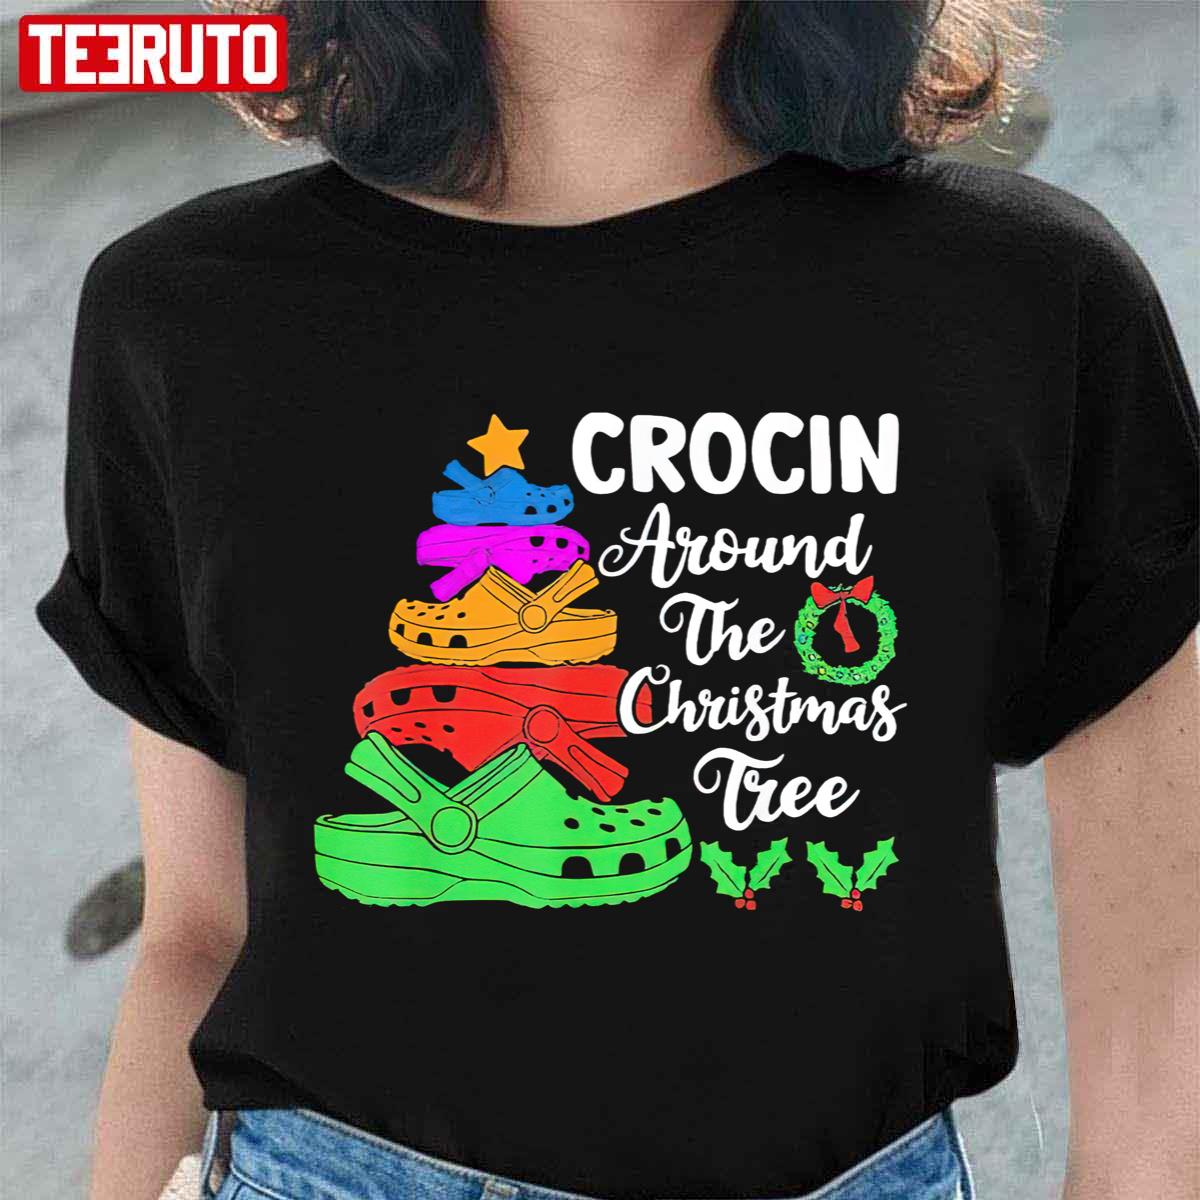 Crocin Around The Christmas Tree Lights Xmas Unisex Sweatshirt